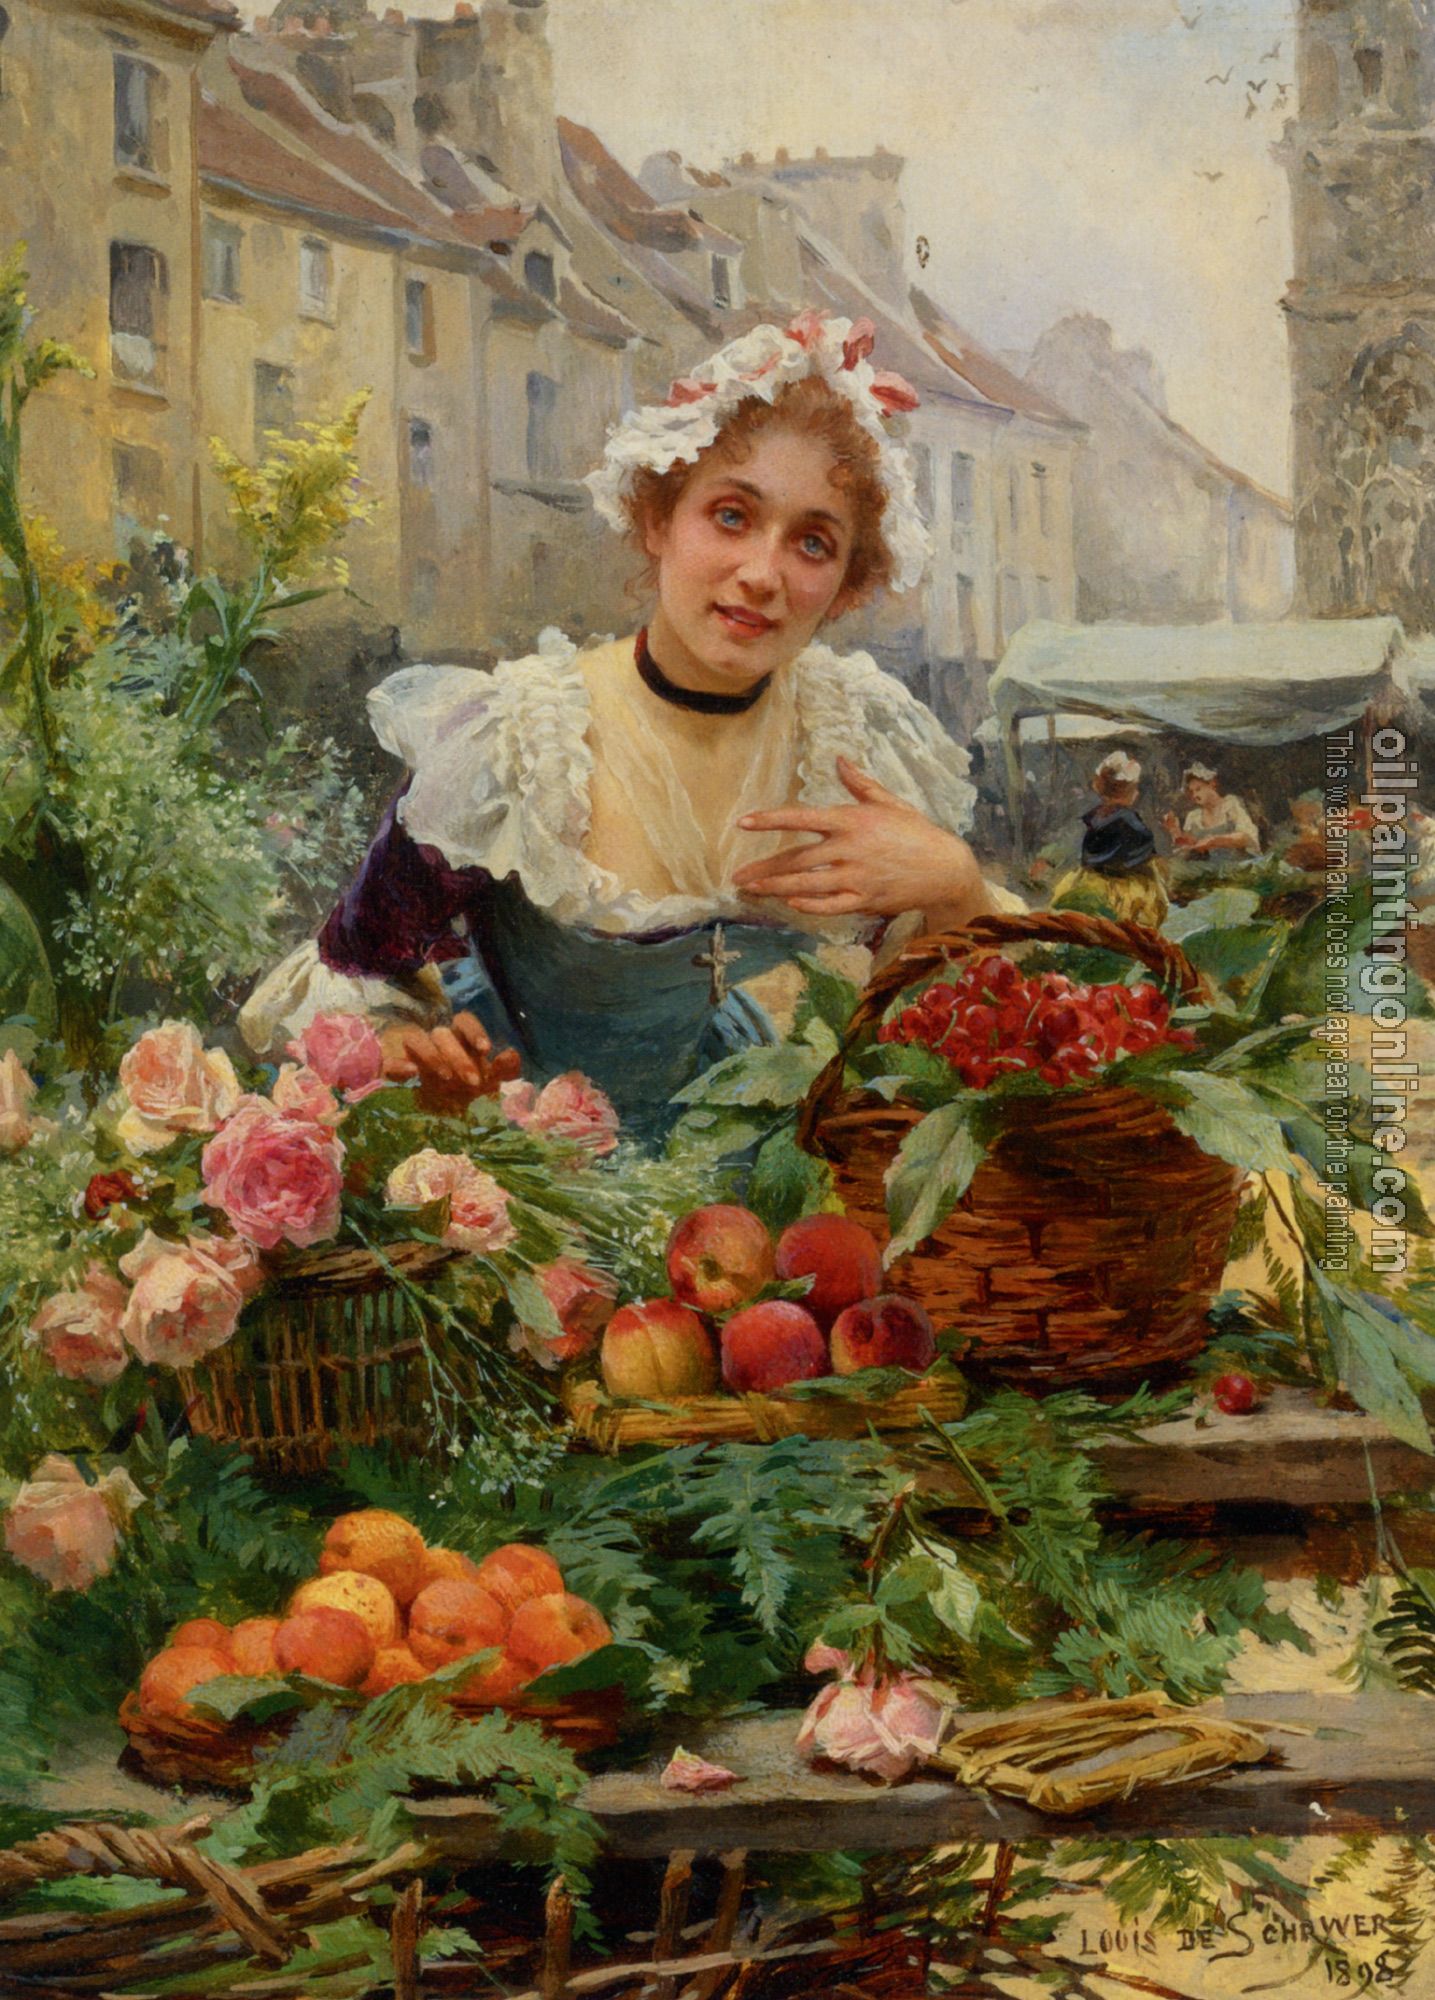 Schryver, Louis Marie de - The Flower Seller